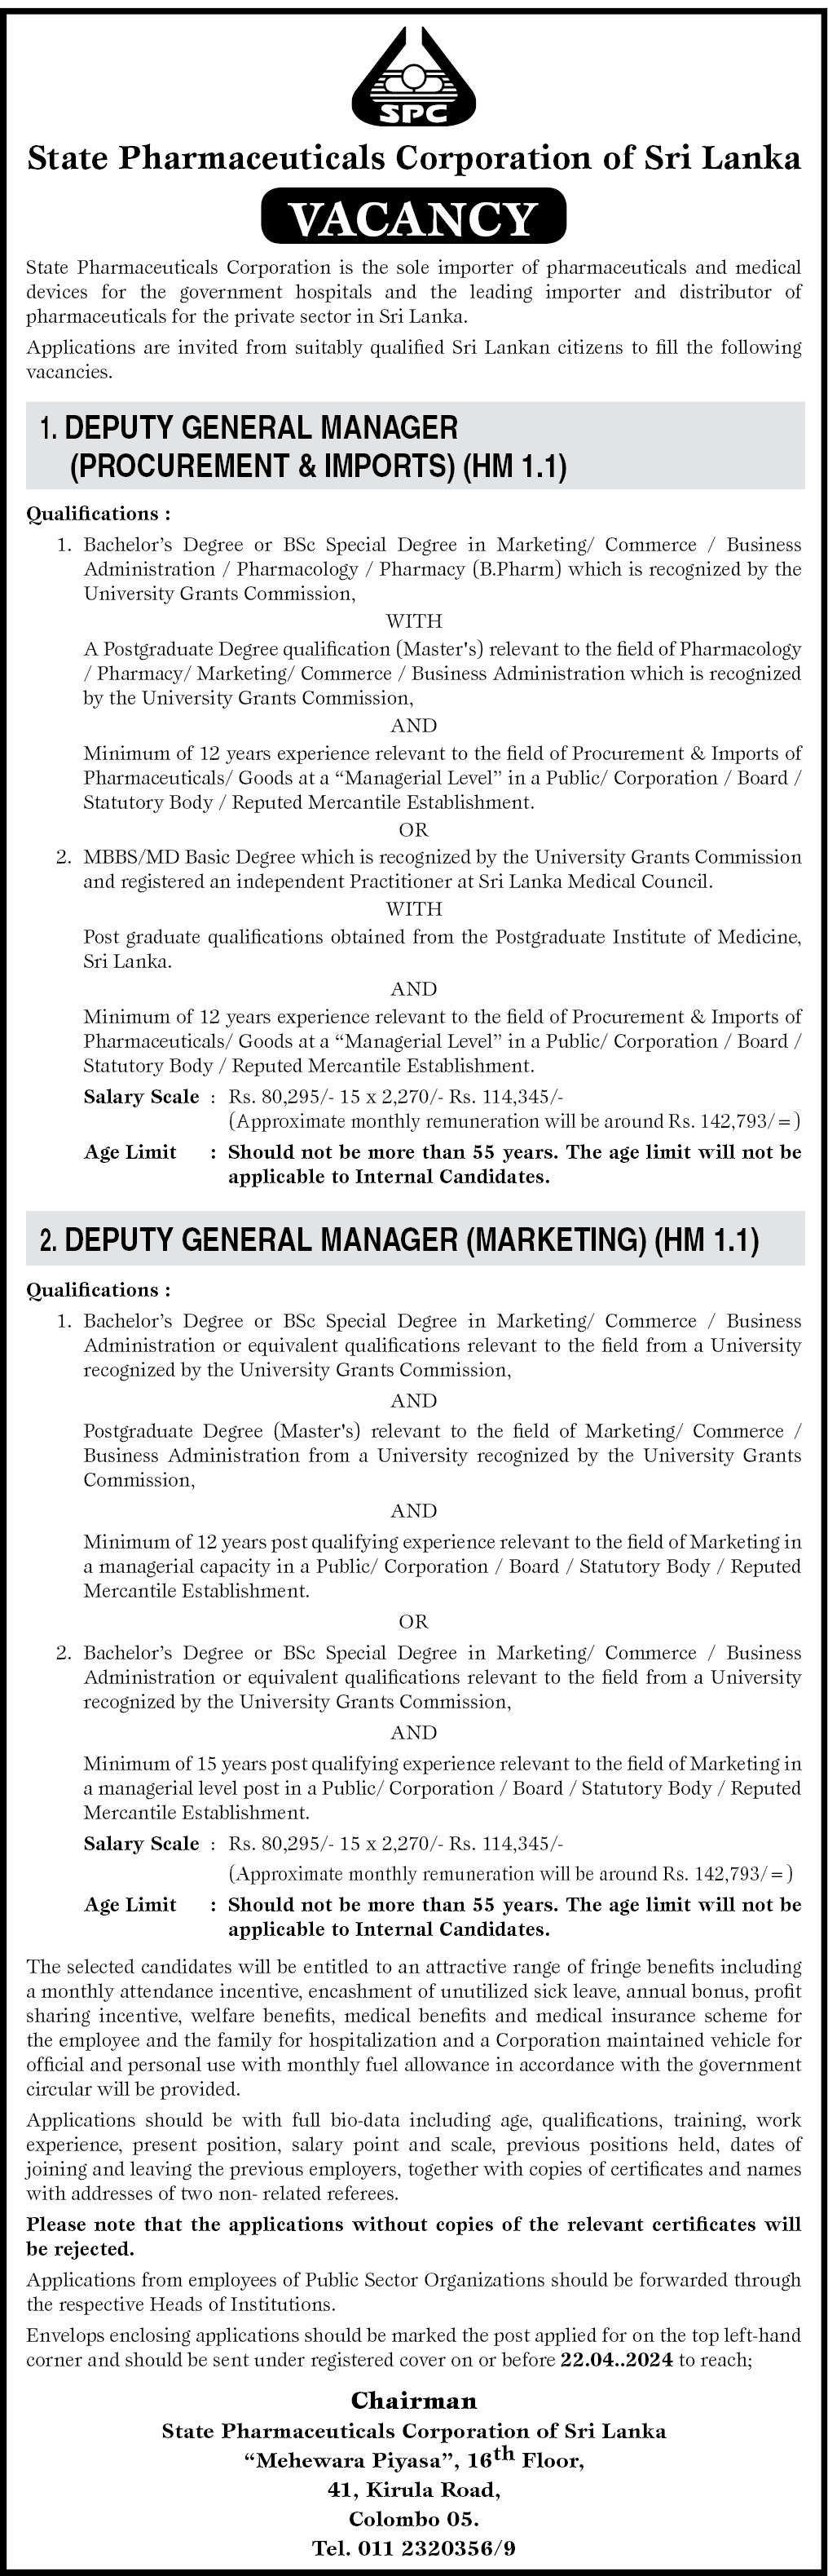 Deputy General Manager - State pharmaceuticals Corporation of Sri Lanka